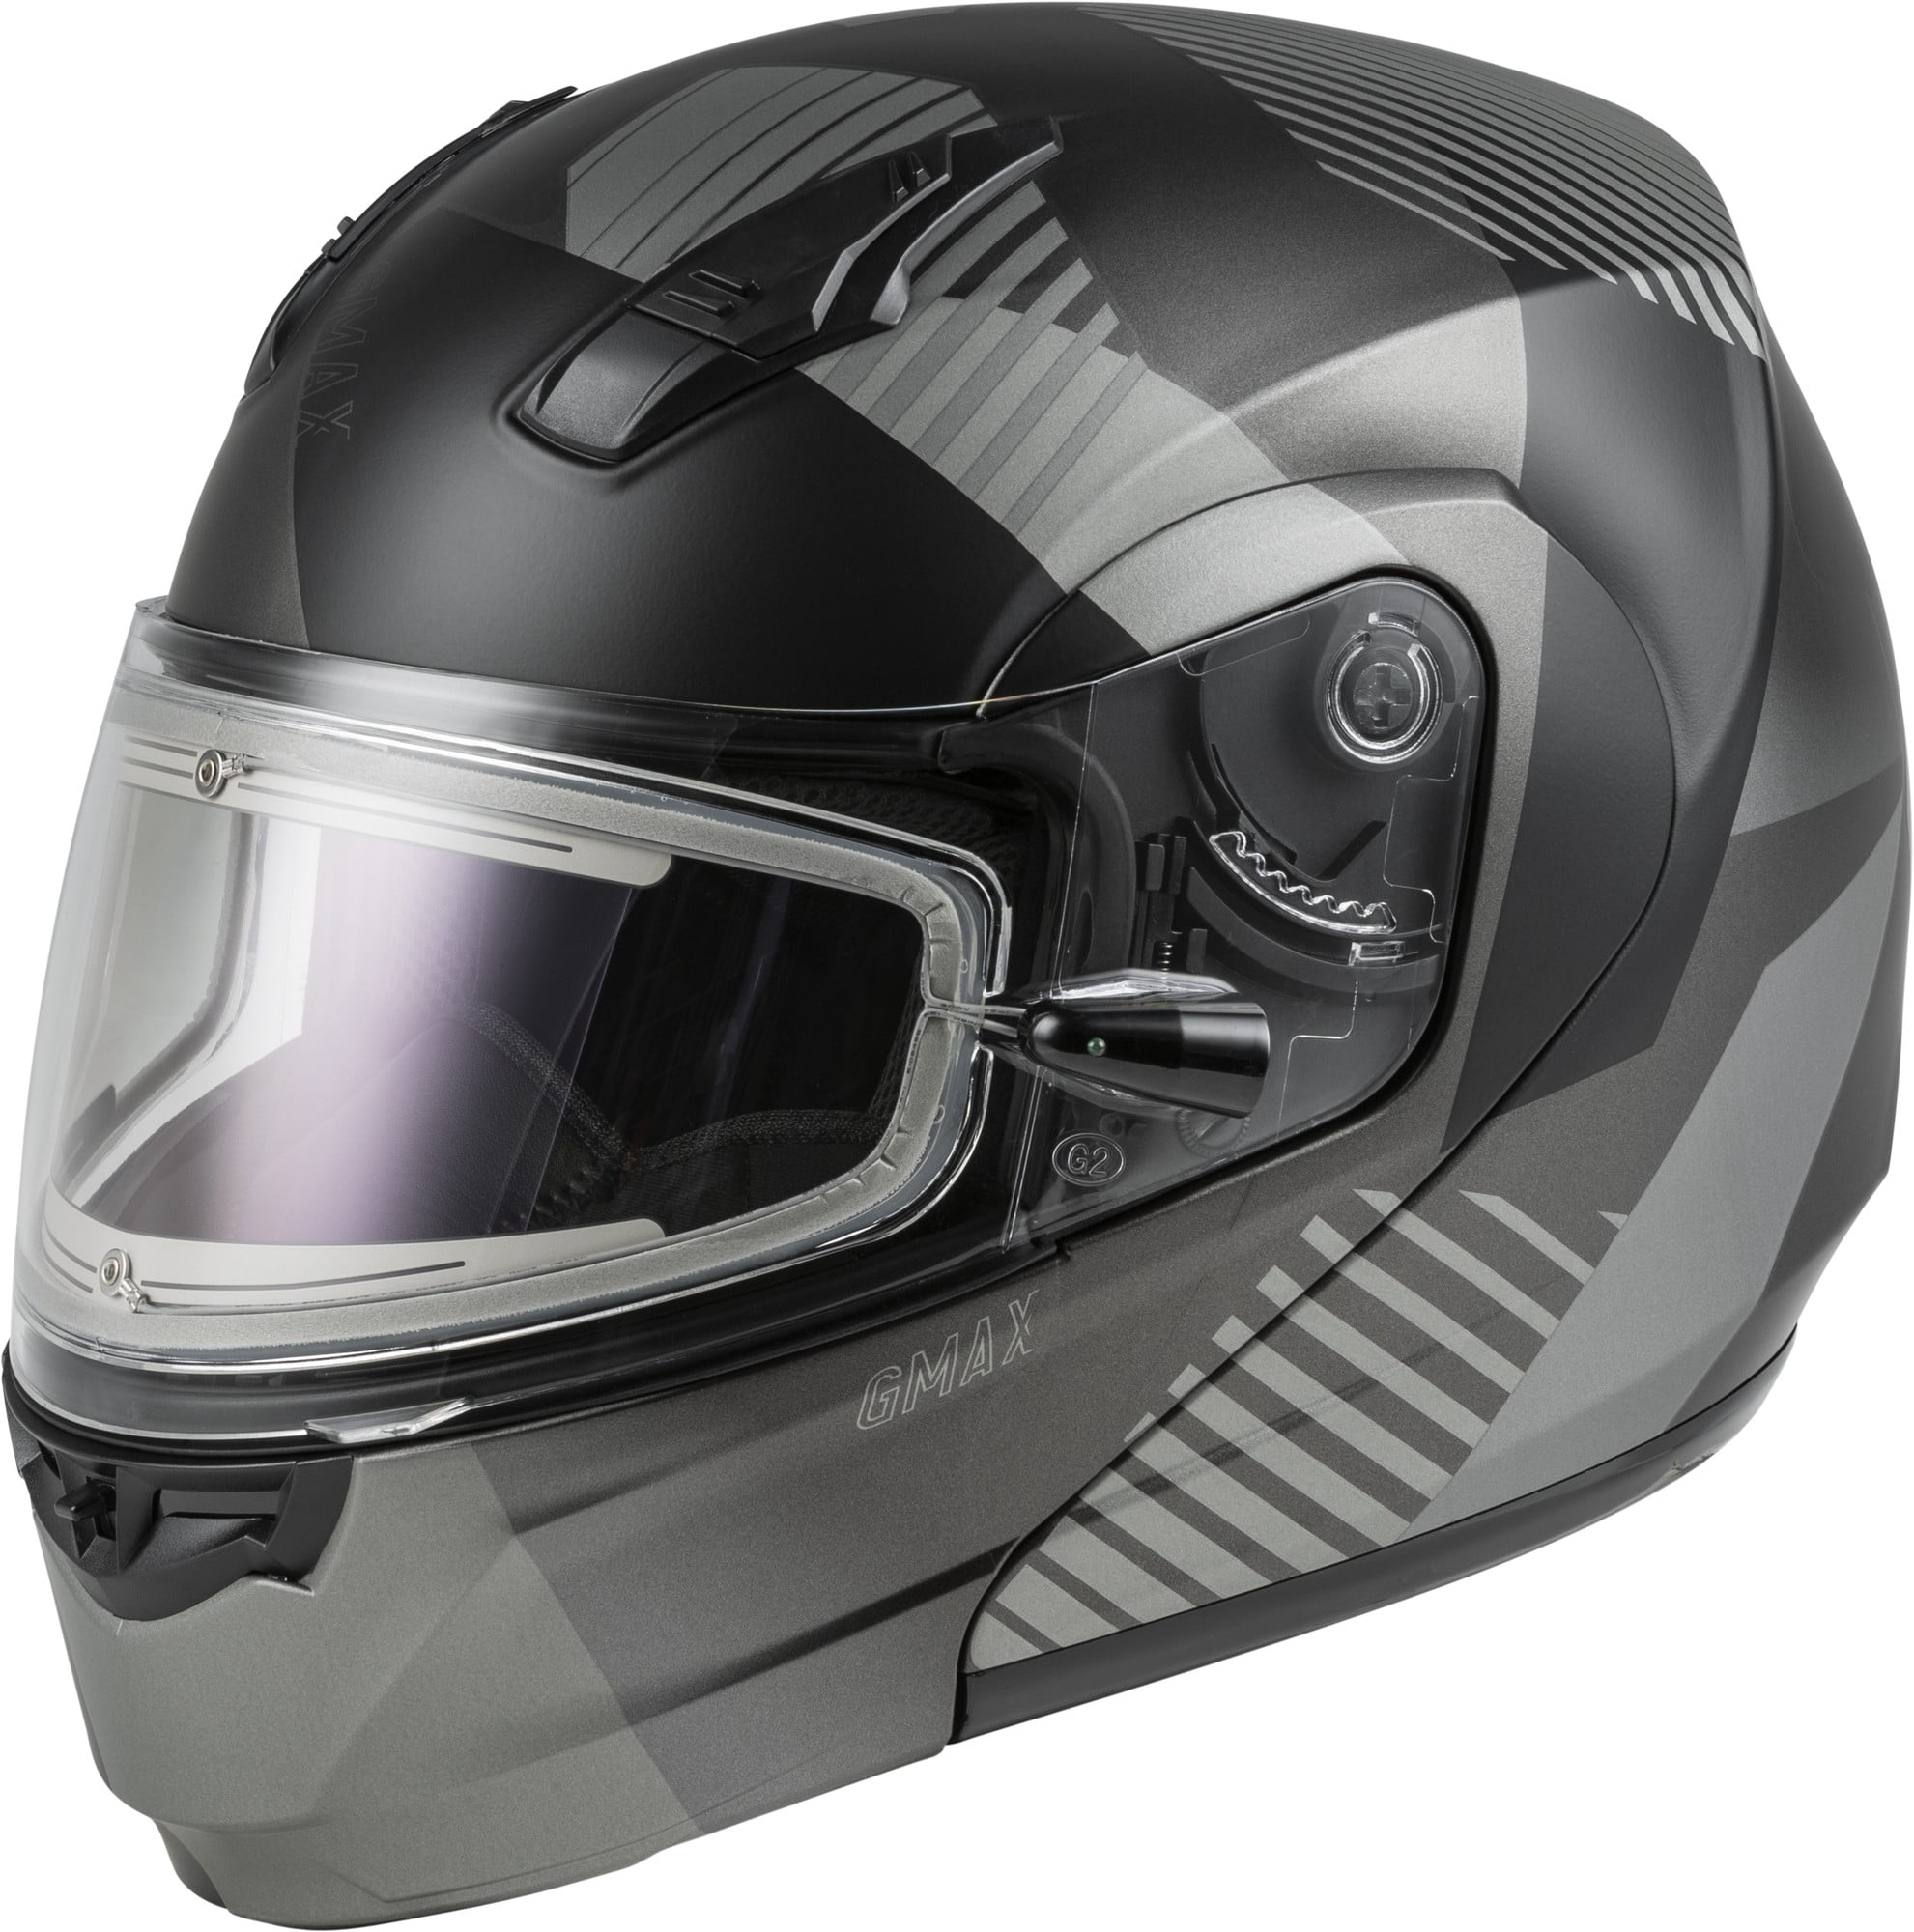 Gmax MD-04S Modular Snow Helmet W Electric Shield Black 